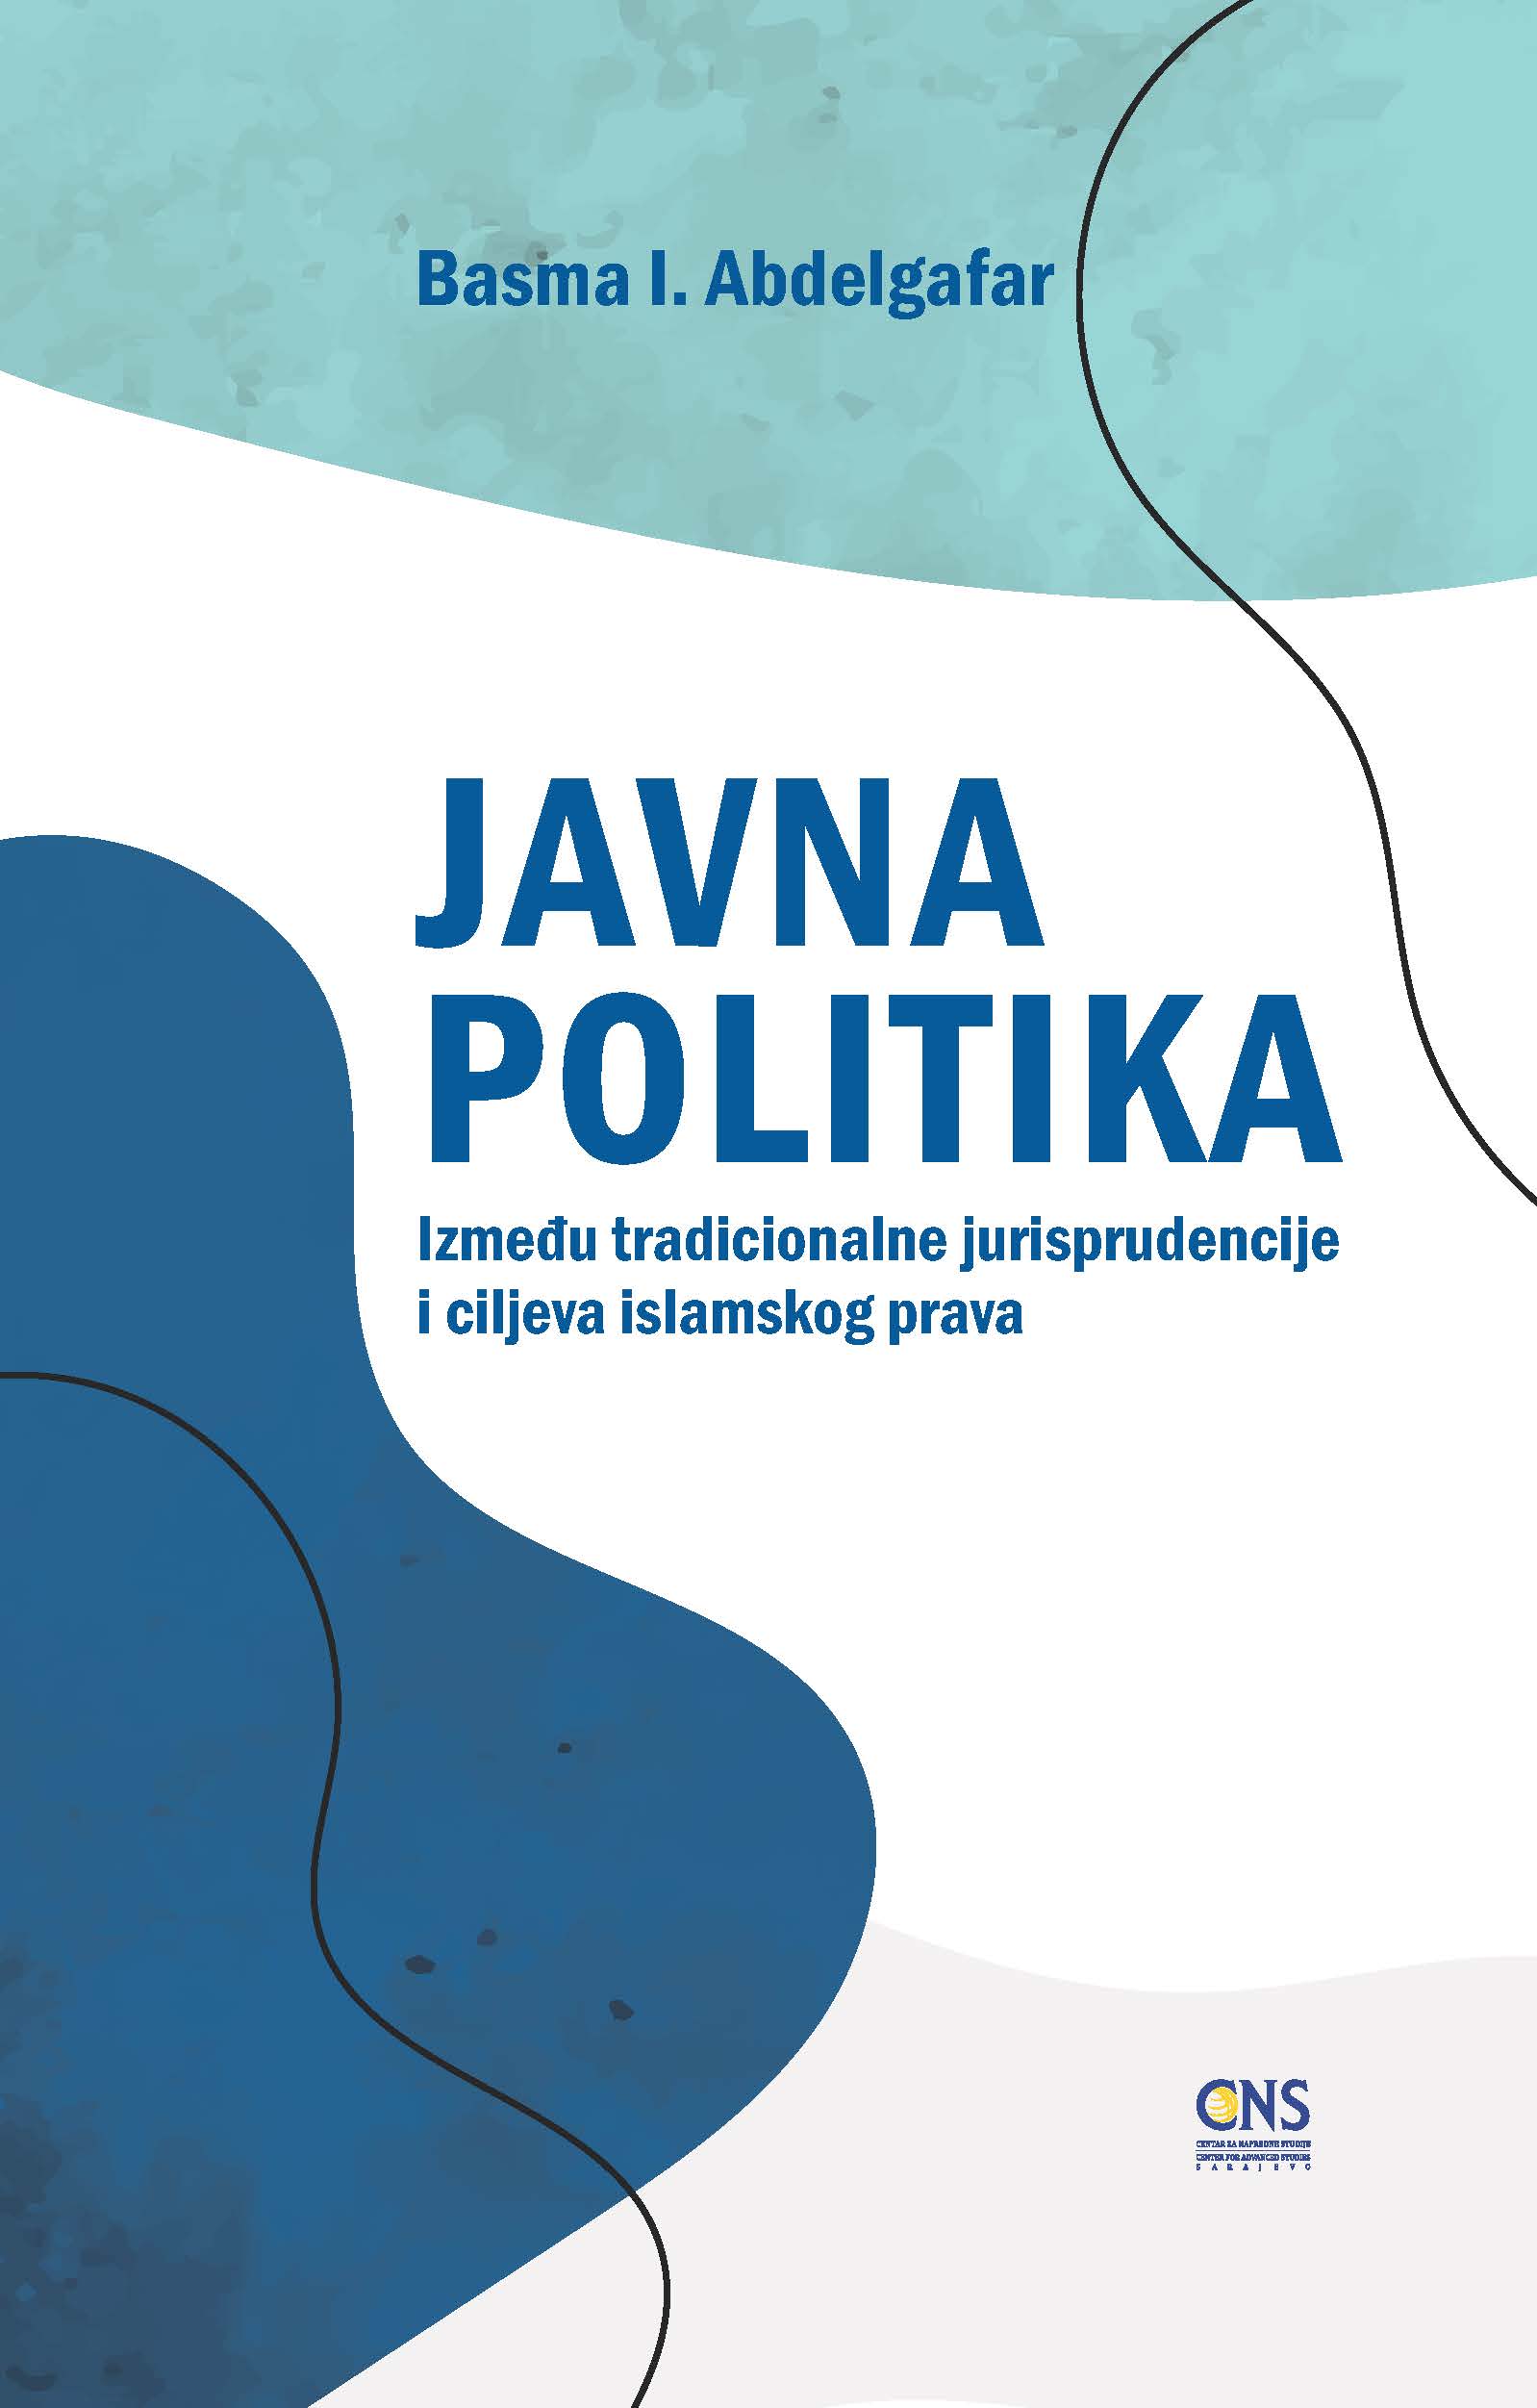 Bosnian: Public Policy: Beyond Traditional Jurisprudence: A Maqasid Approach